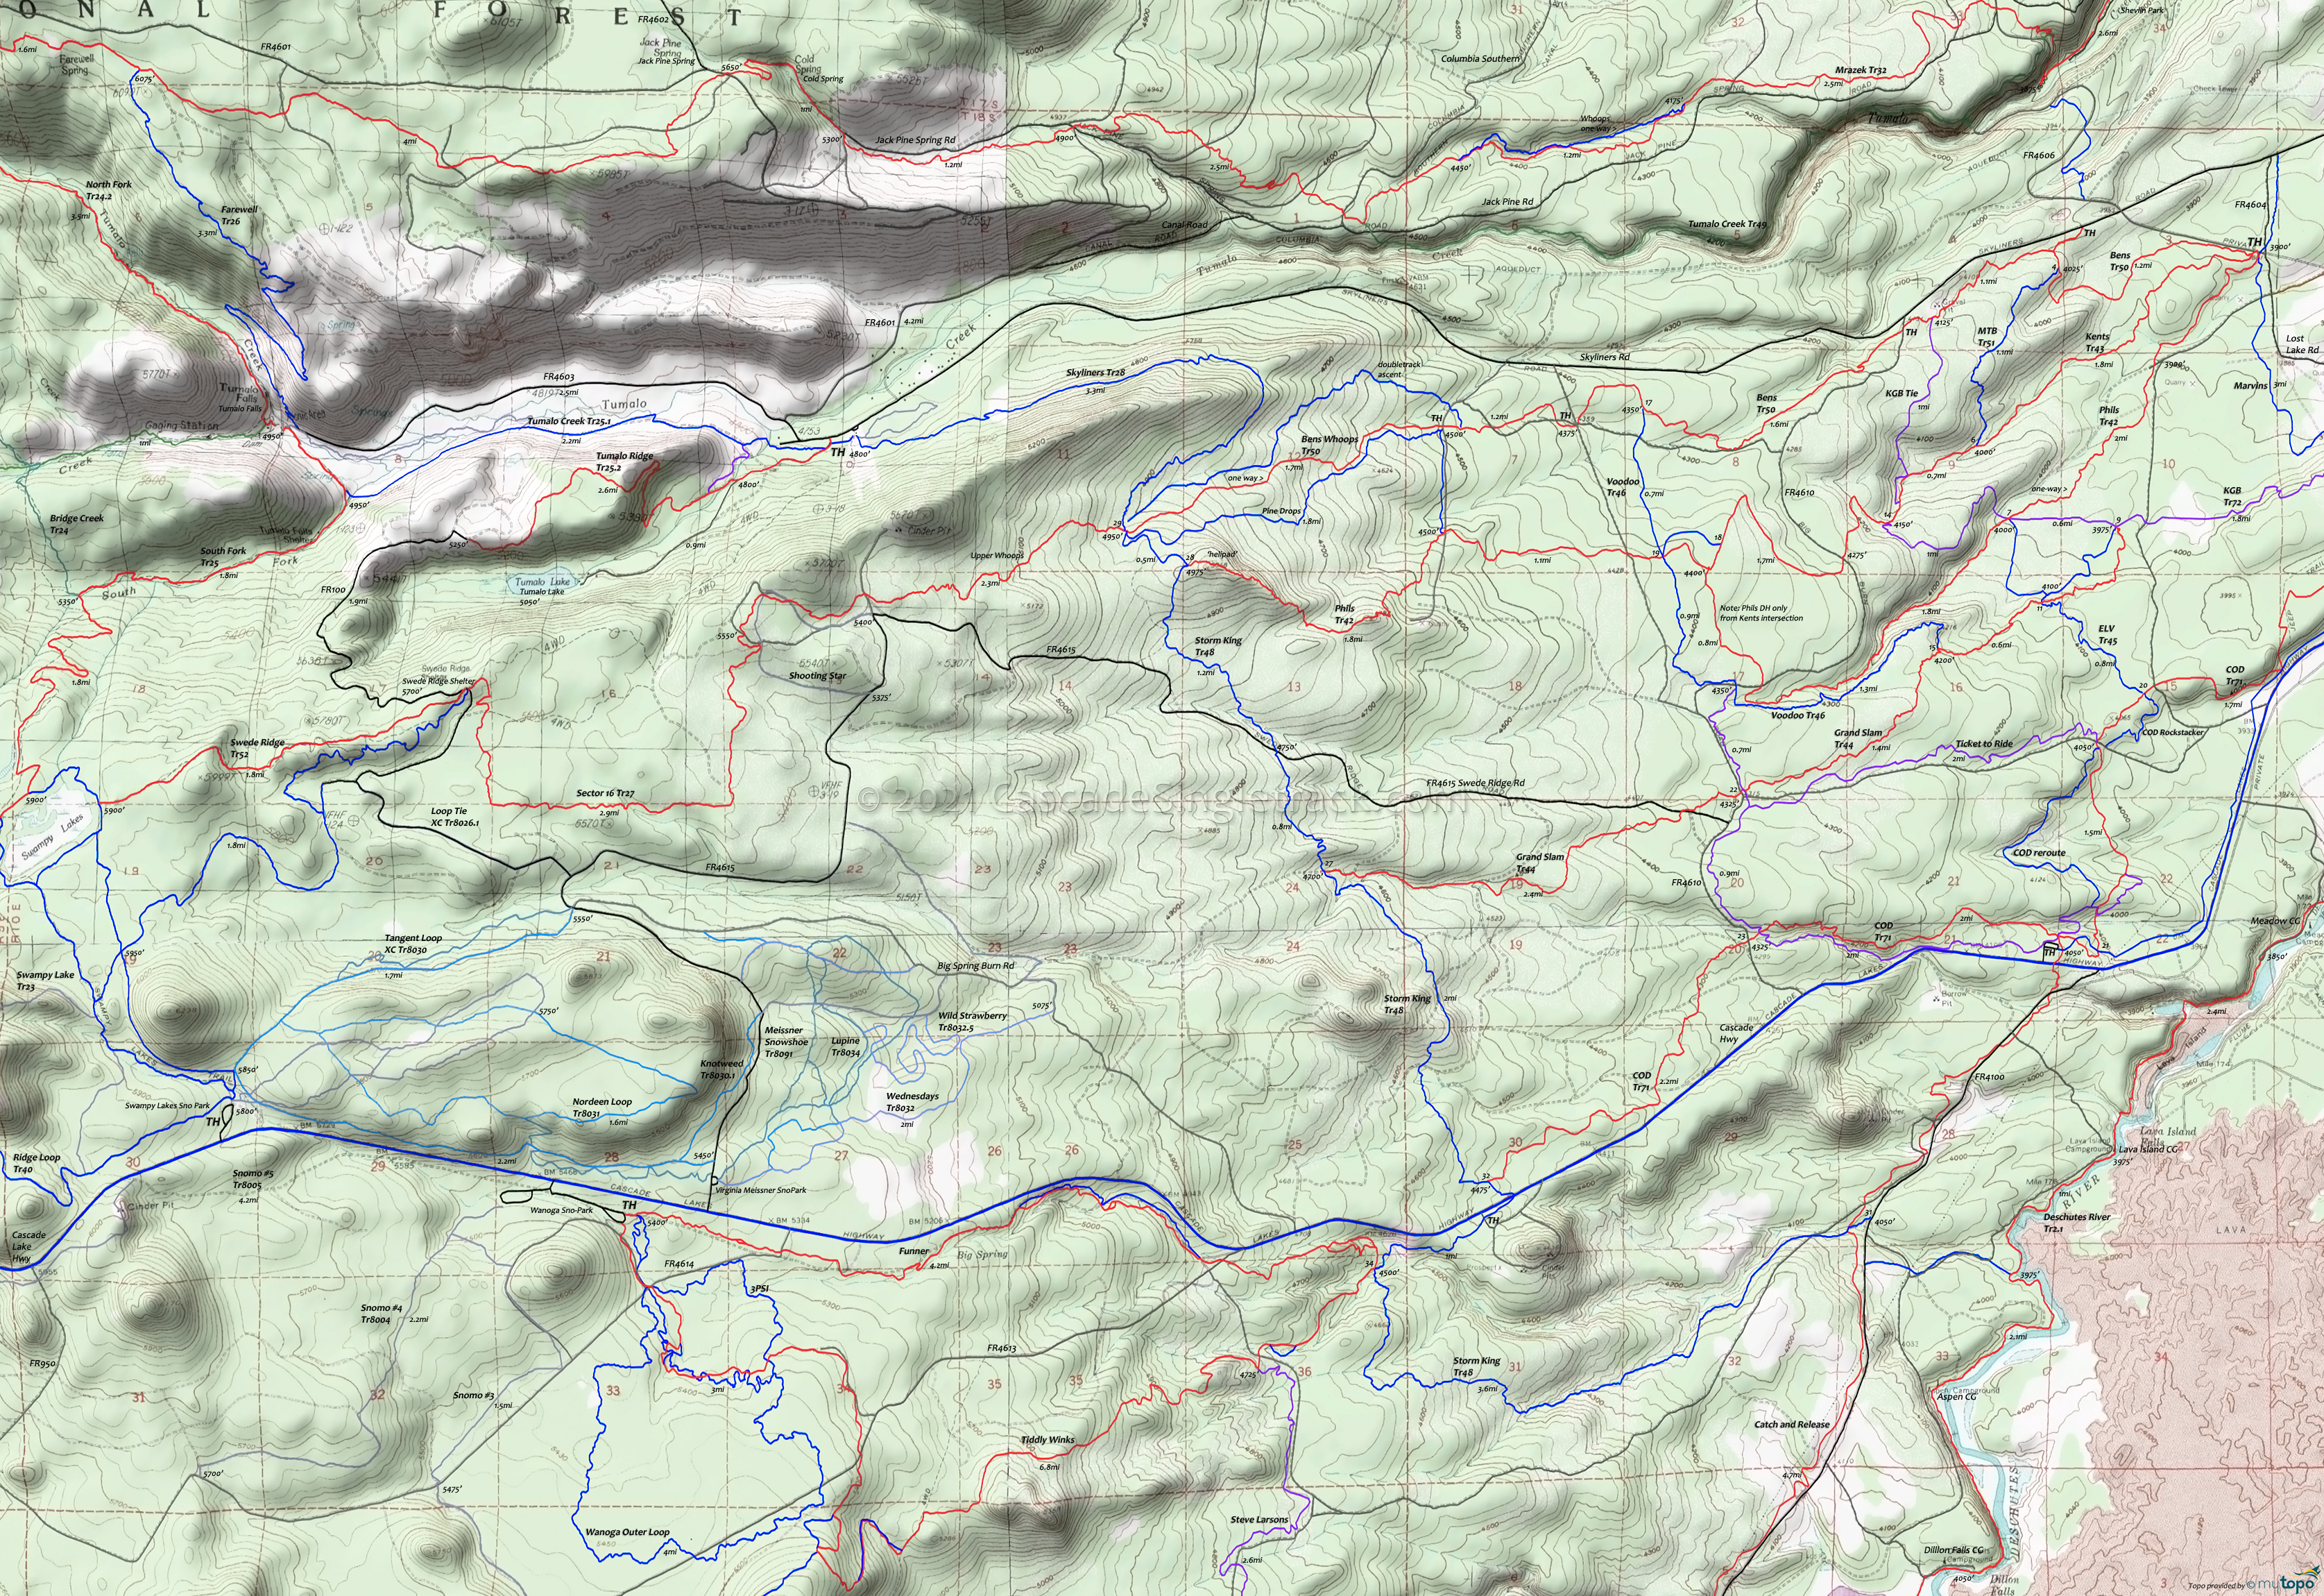  Bens Trail 50, Phils Trail 42, Kents Trail 43, MTB Trail 51, Sector 16 Trail 27, Skyliners Trail 28, Storm King Trail 48 Area Topo Map